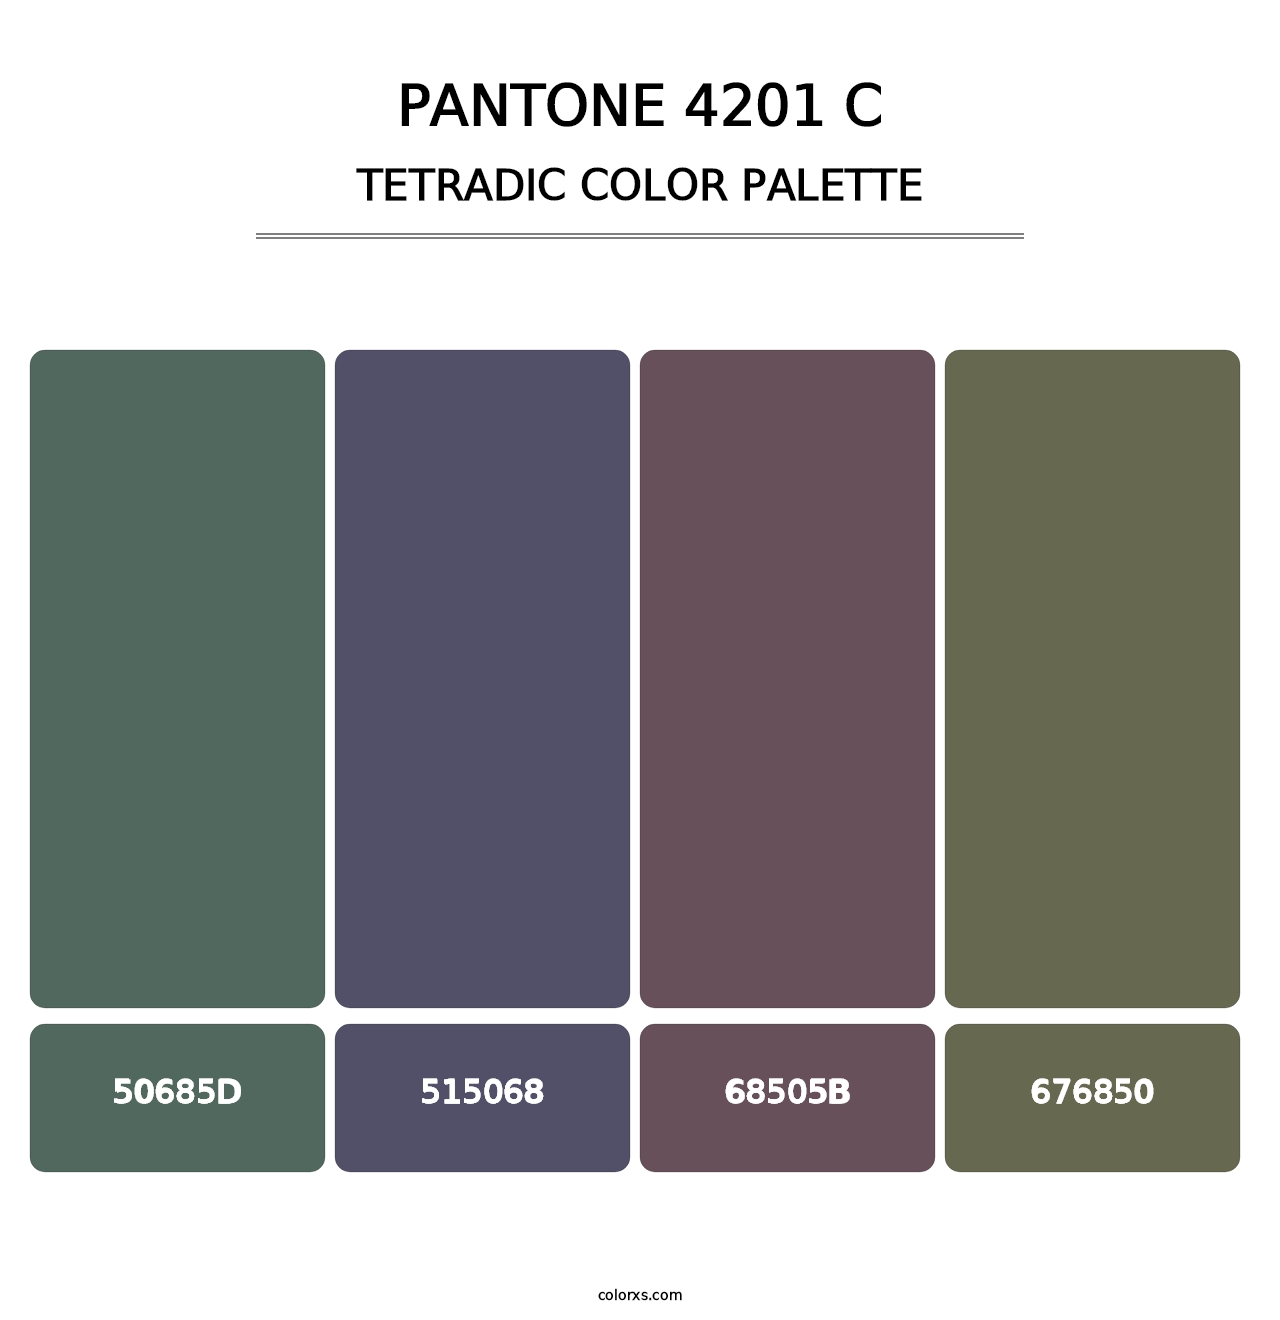 PANTONE 4201 C - Tetradic Color Palette